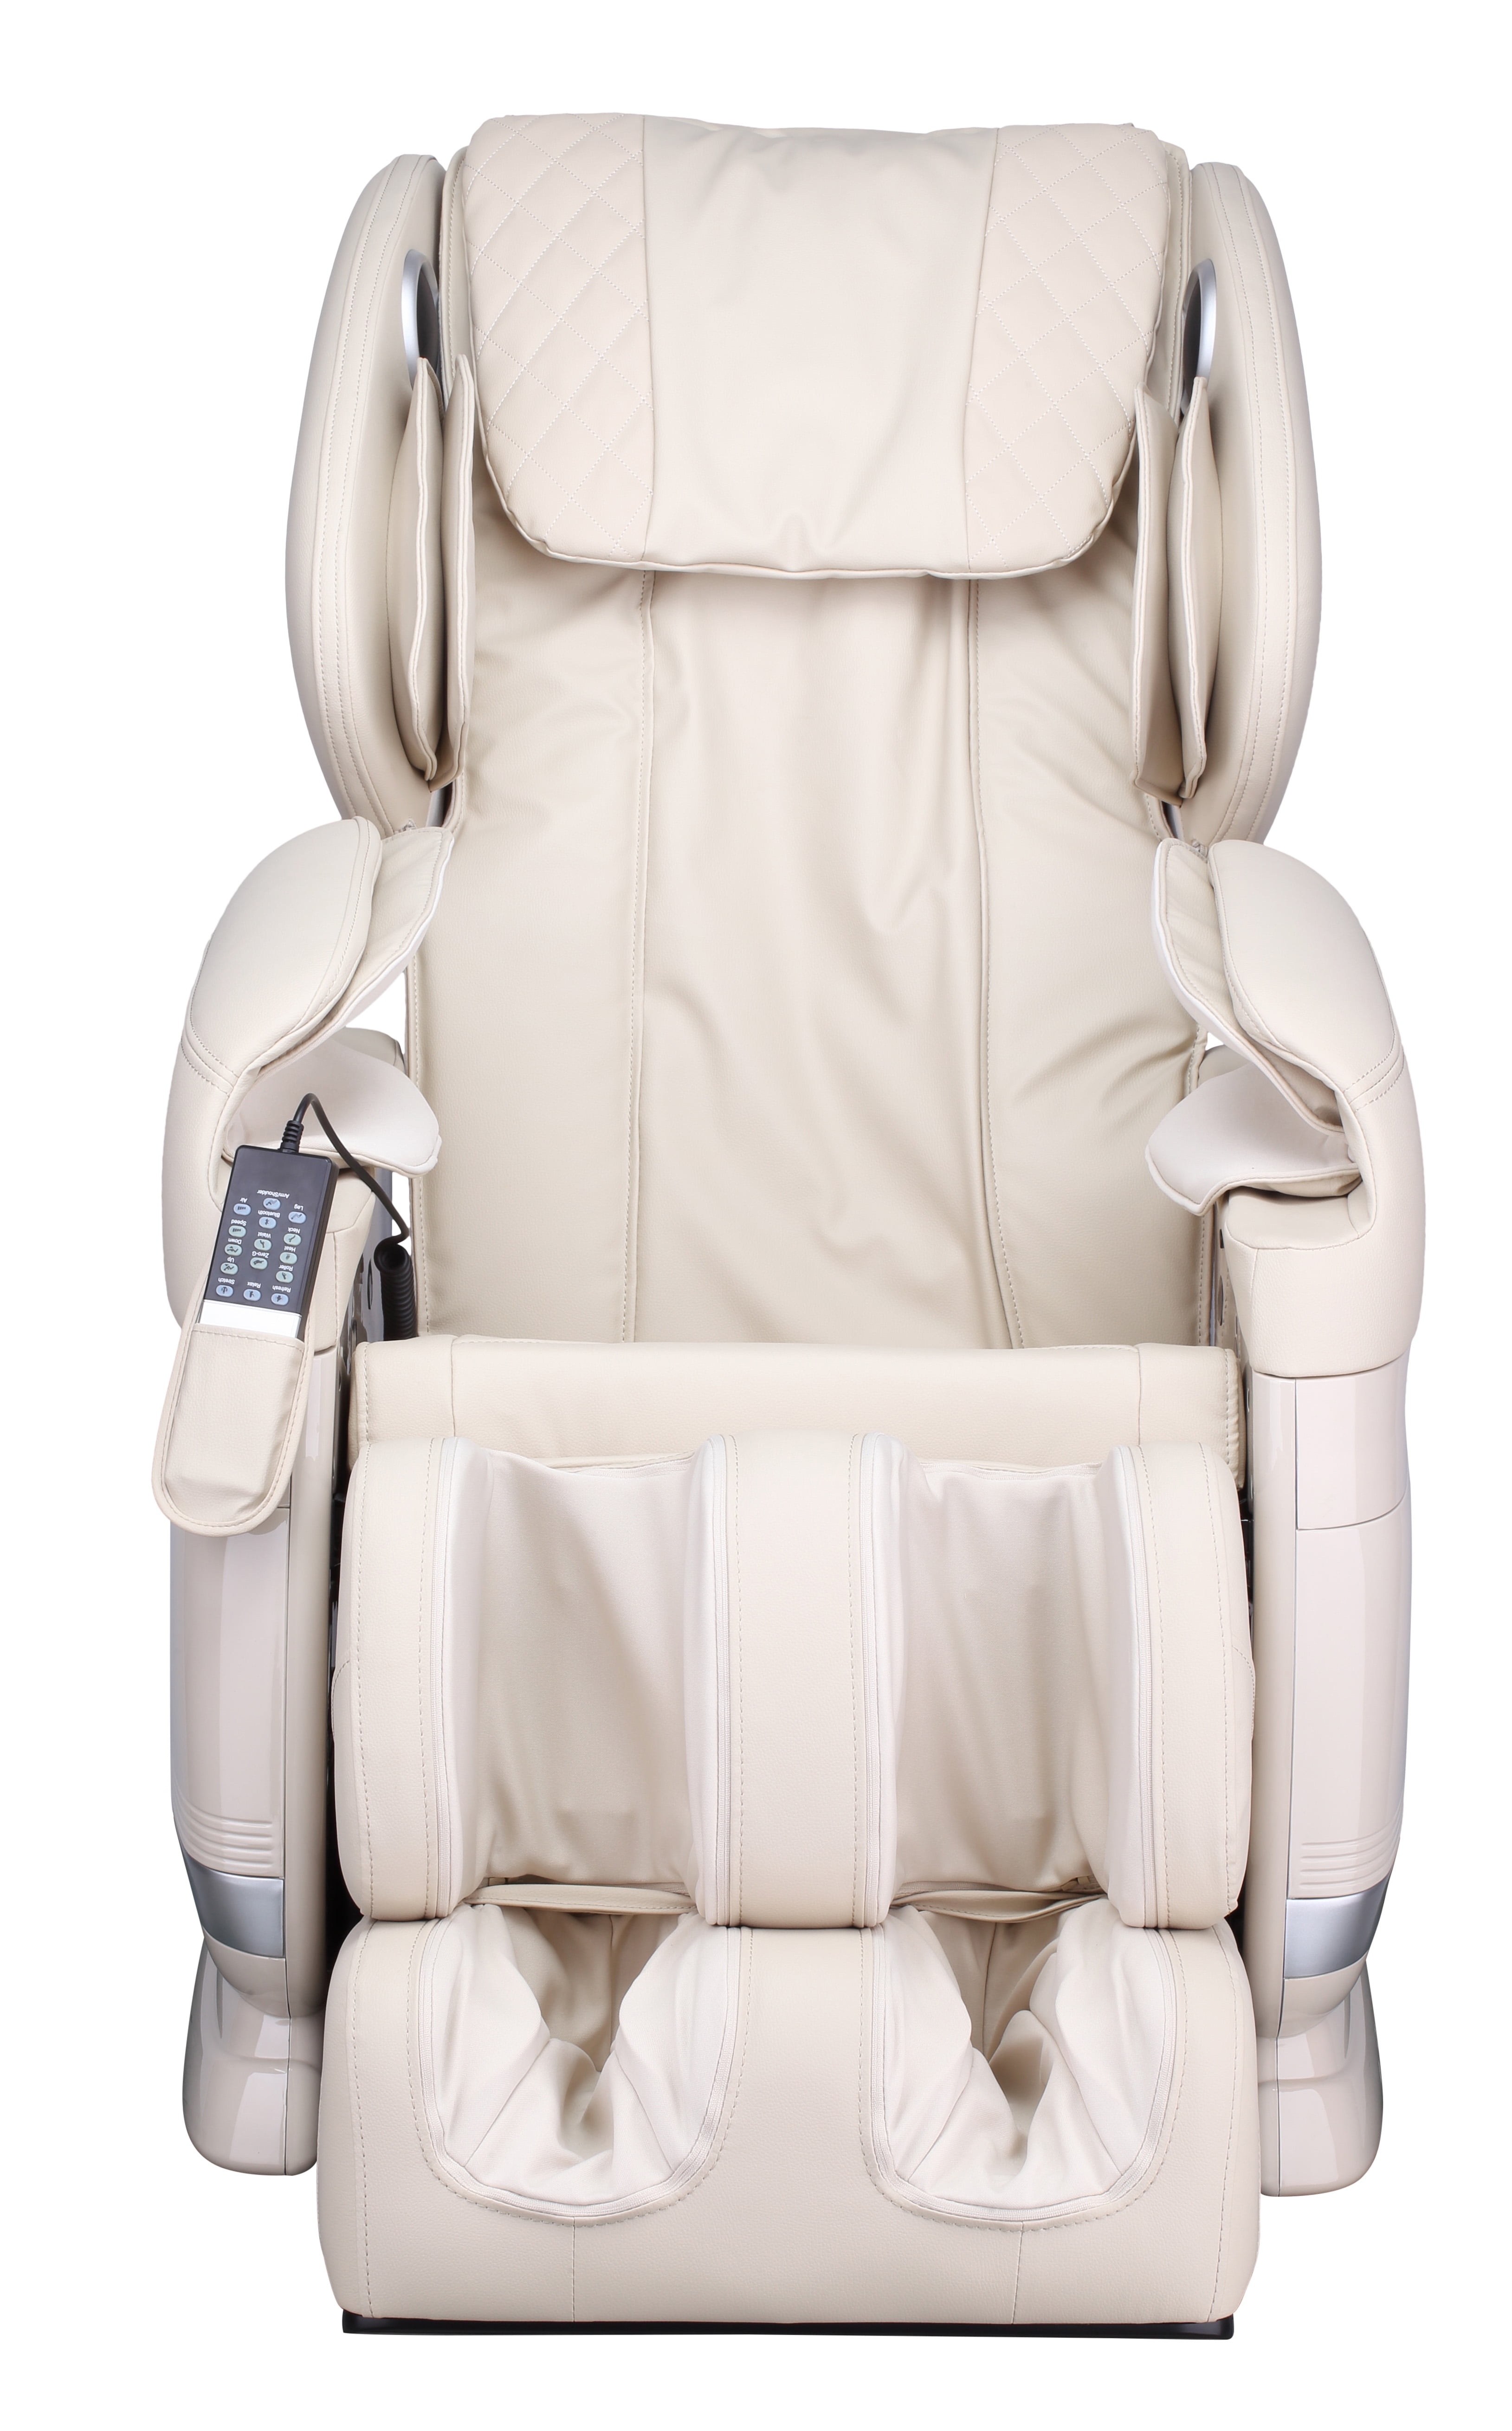 Lifesmart 2D Full Body Massage Chair - 21620561